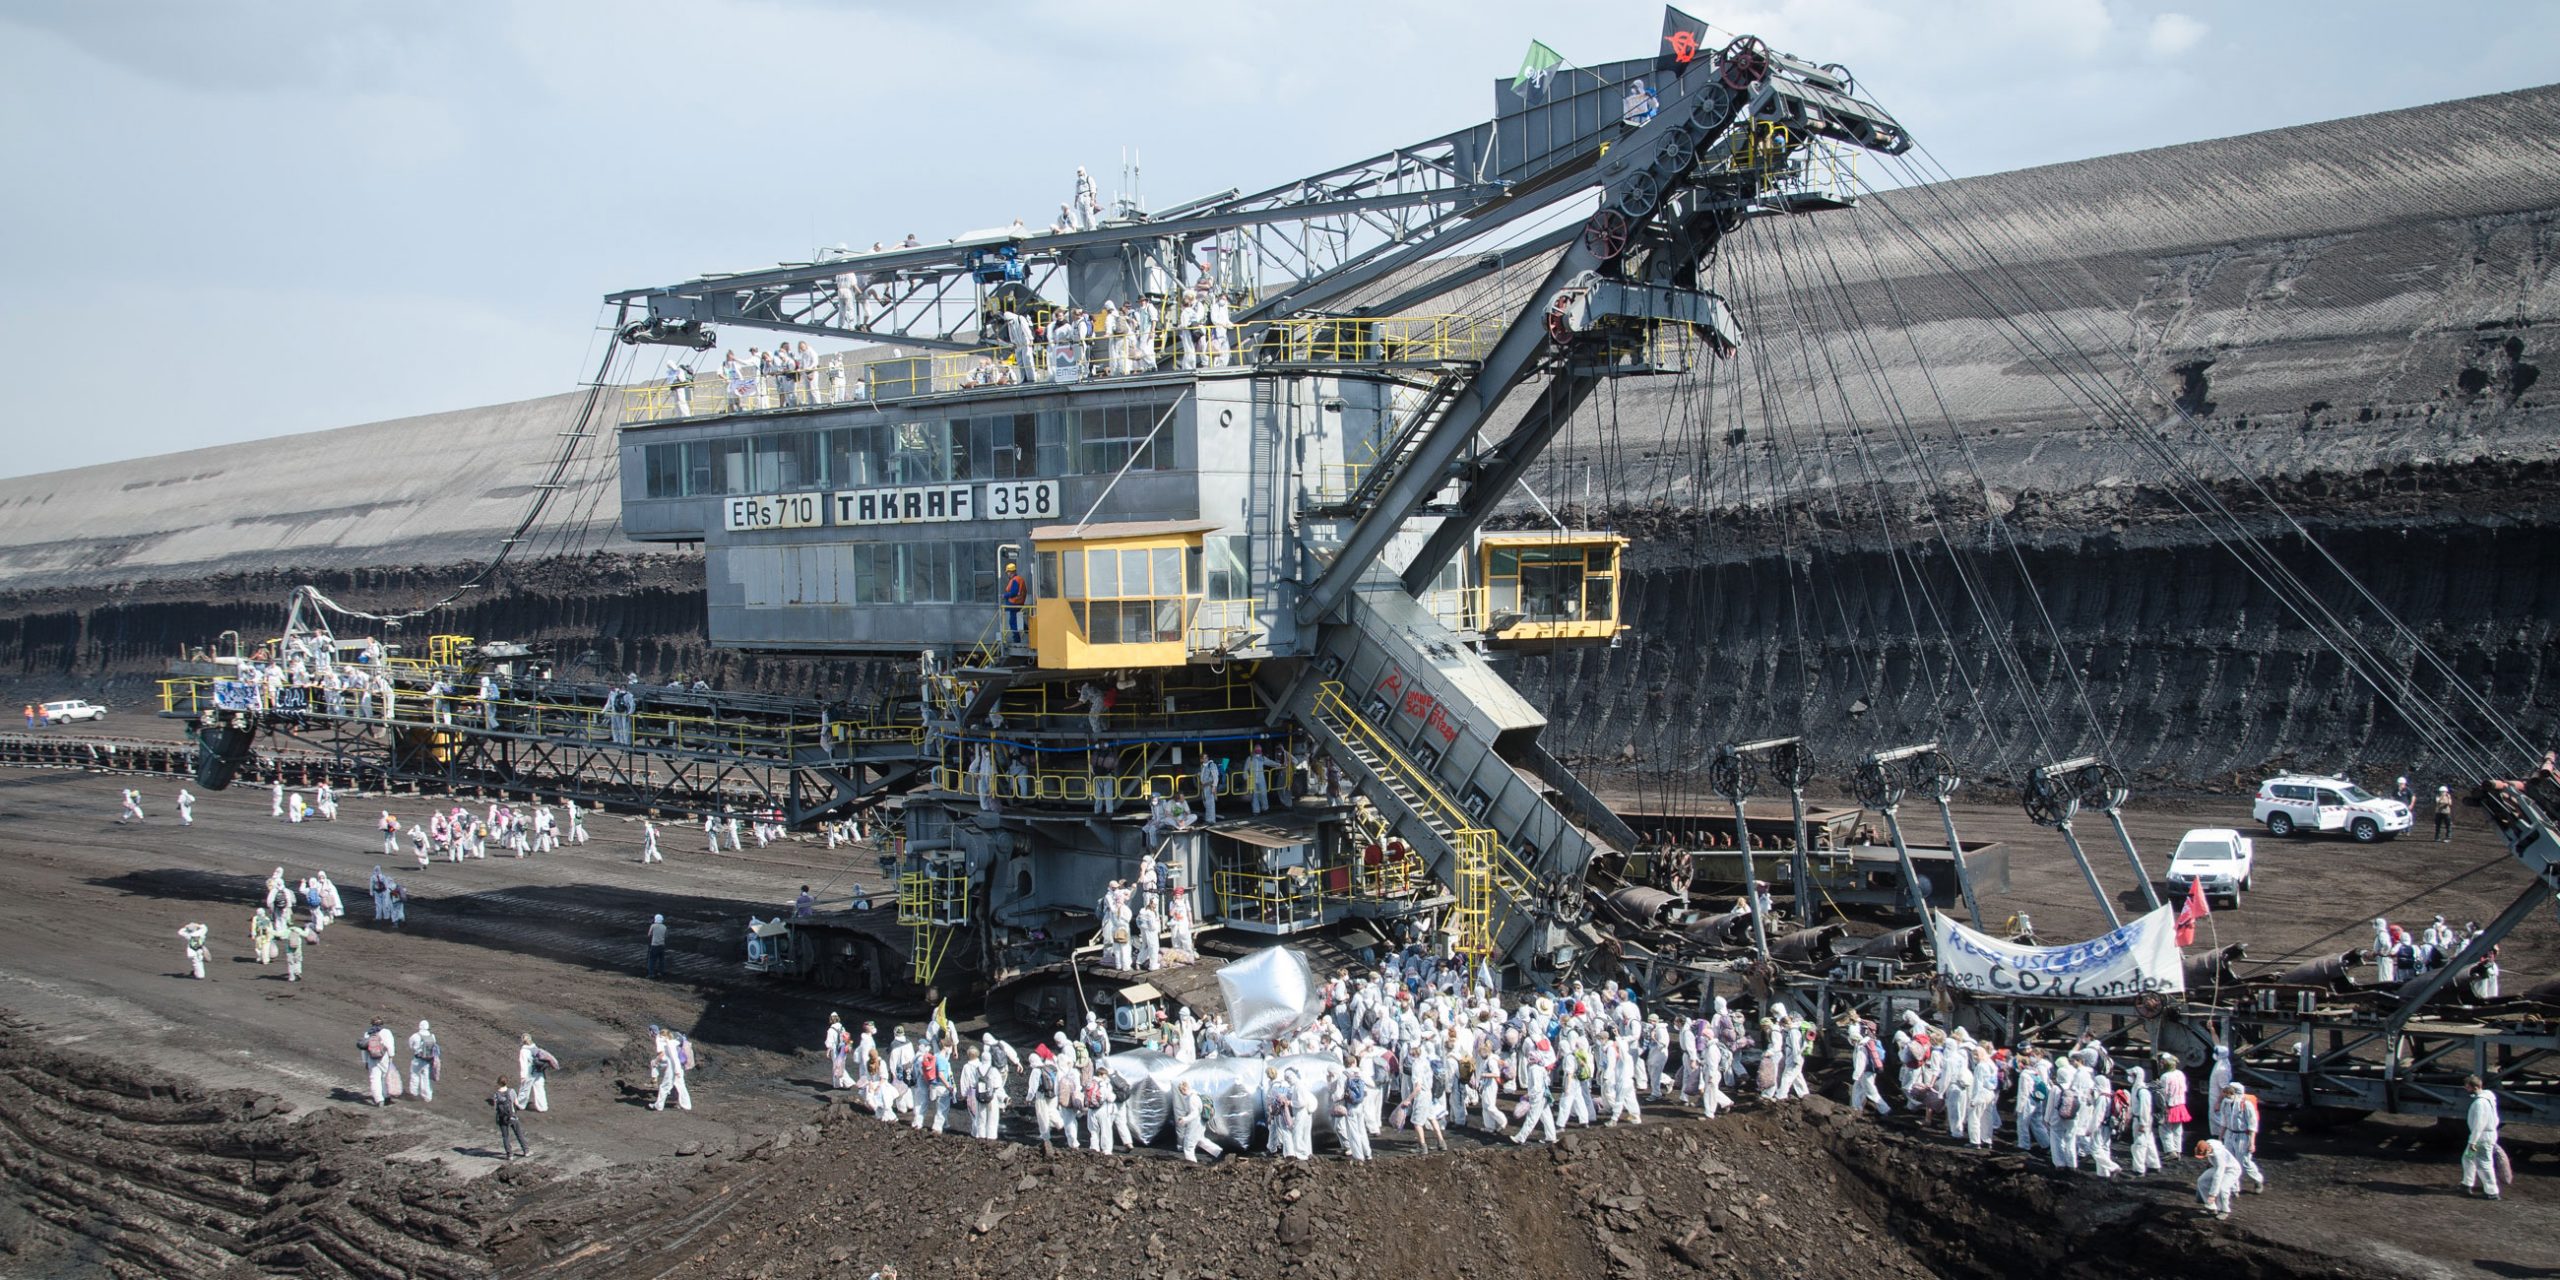 People power shuts down German coal mine Friends of the Earth Europe